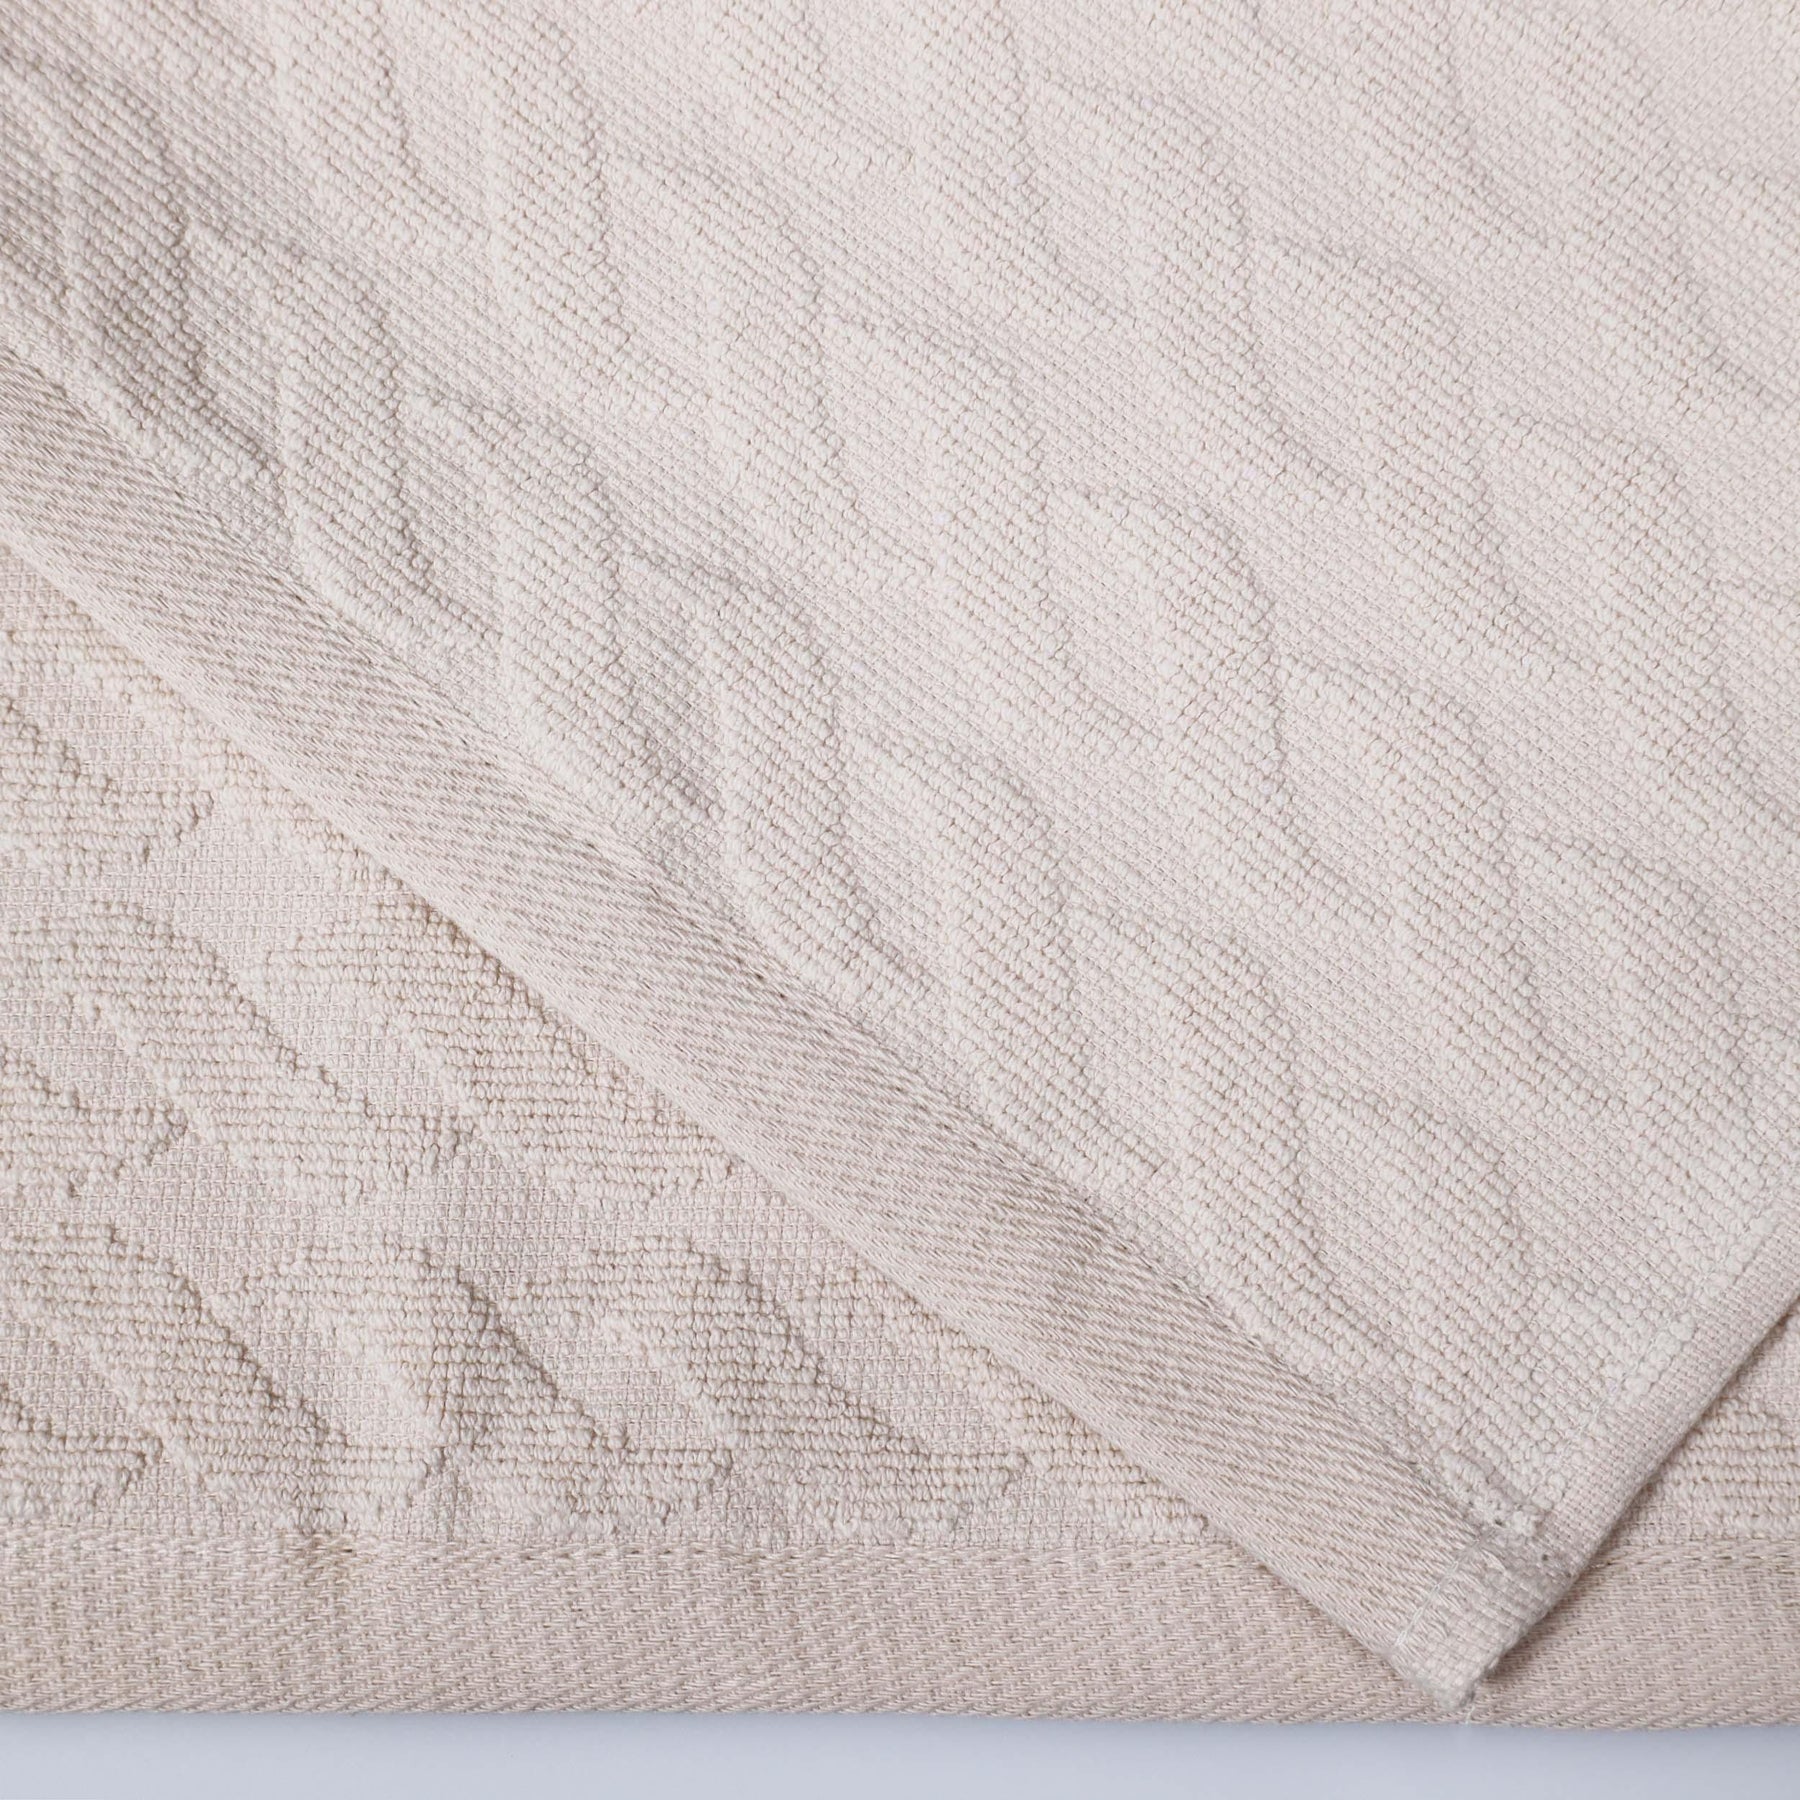 Premium Turkish Cotton Jacquard Herringbone and Solid 6-Piece Hand Towel Set-  Ivory